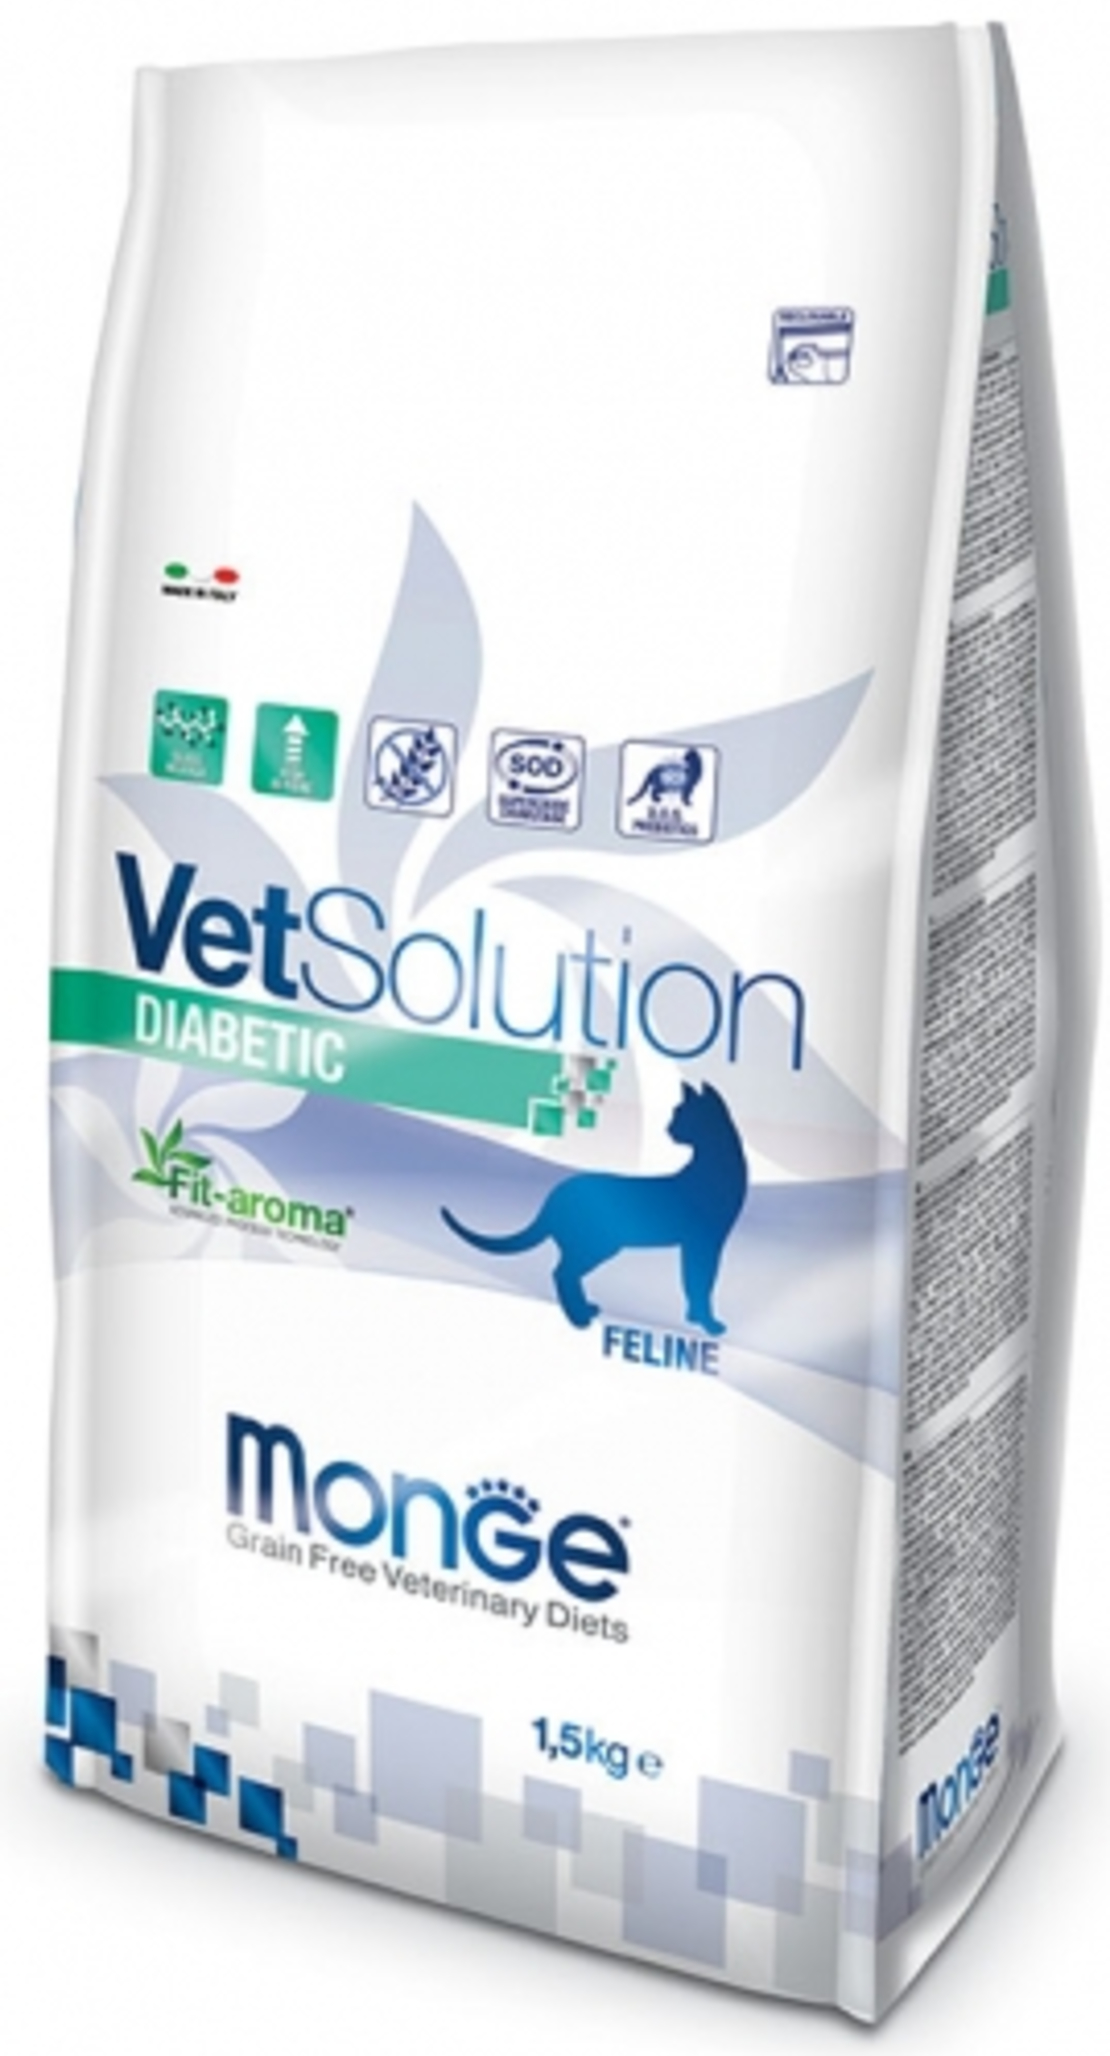 MONGE VetSolution מונג' וט סולושן דיאבטיק מזון רפואי לחתולים 1.5 ק